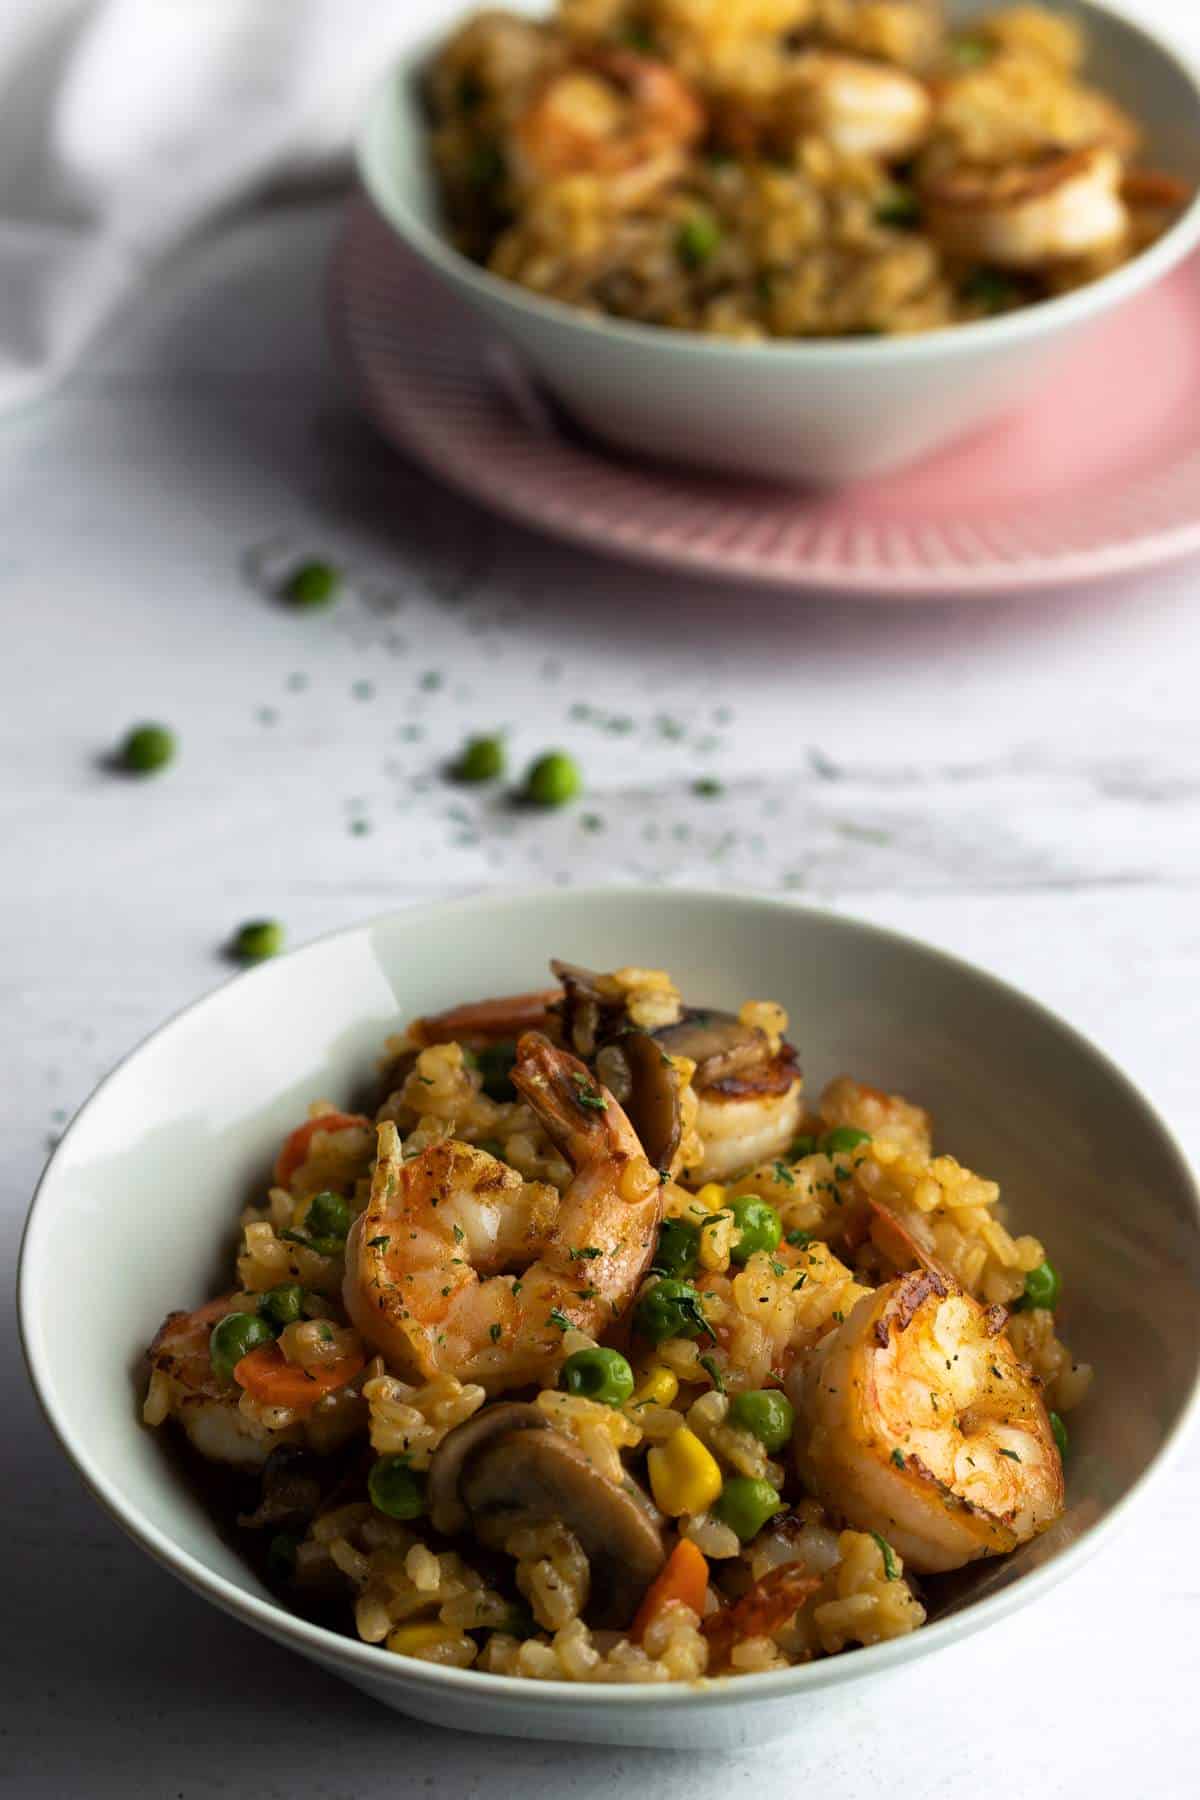 Cajun shrimp and rice pilaf in a bowl.